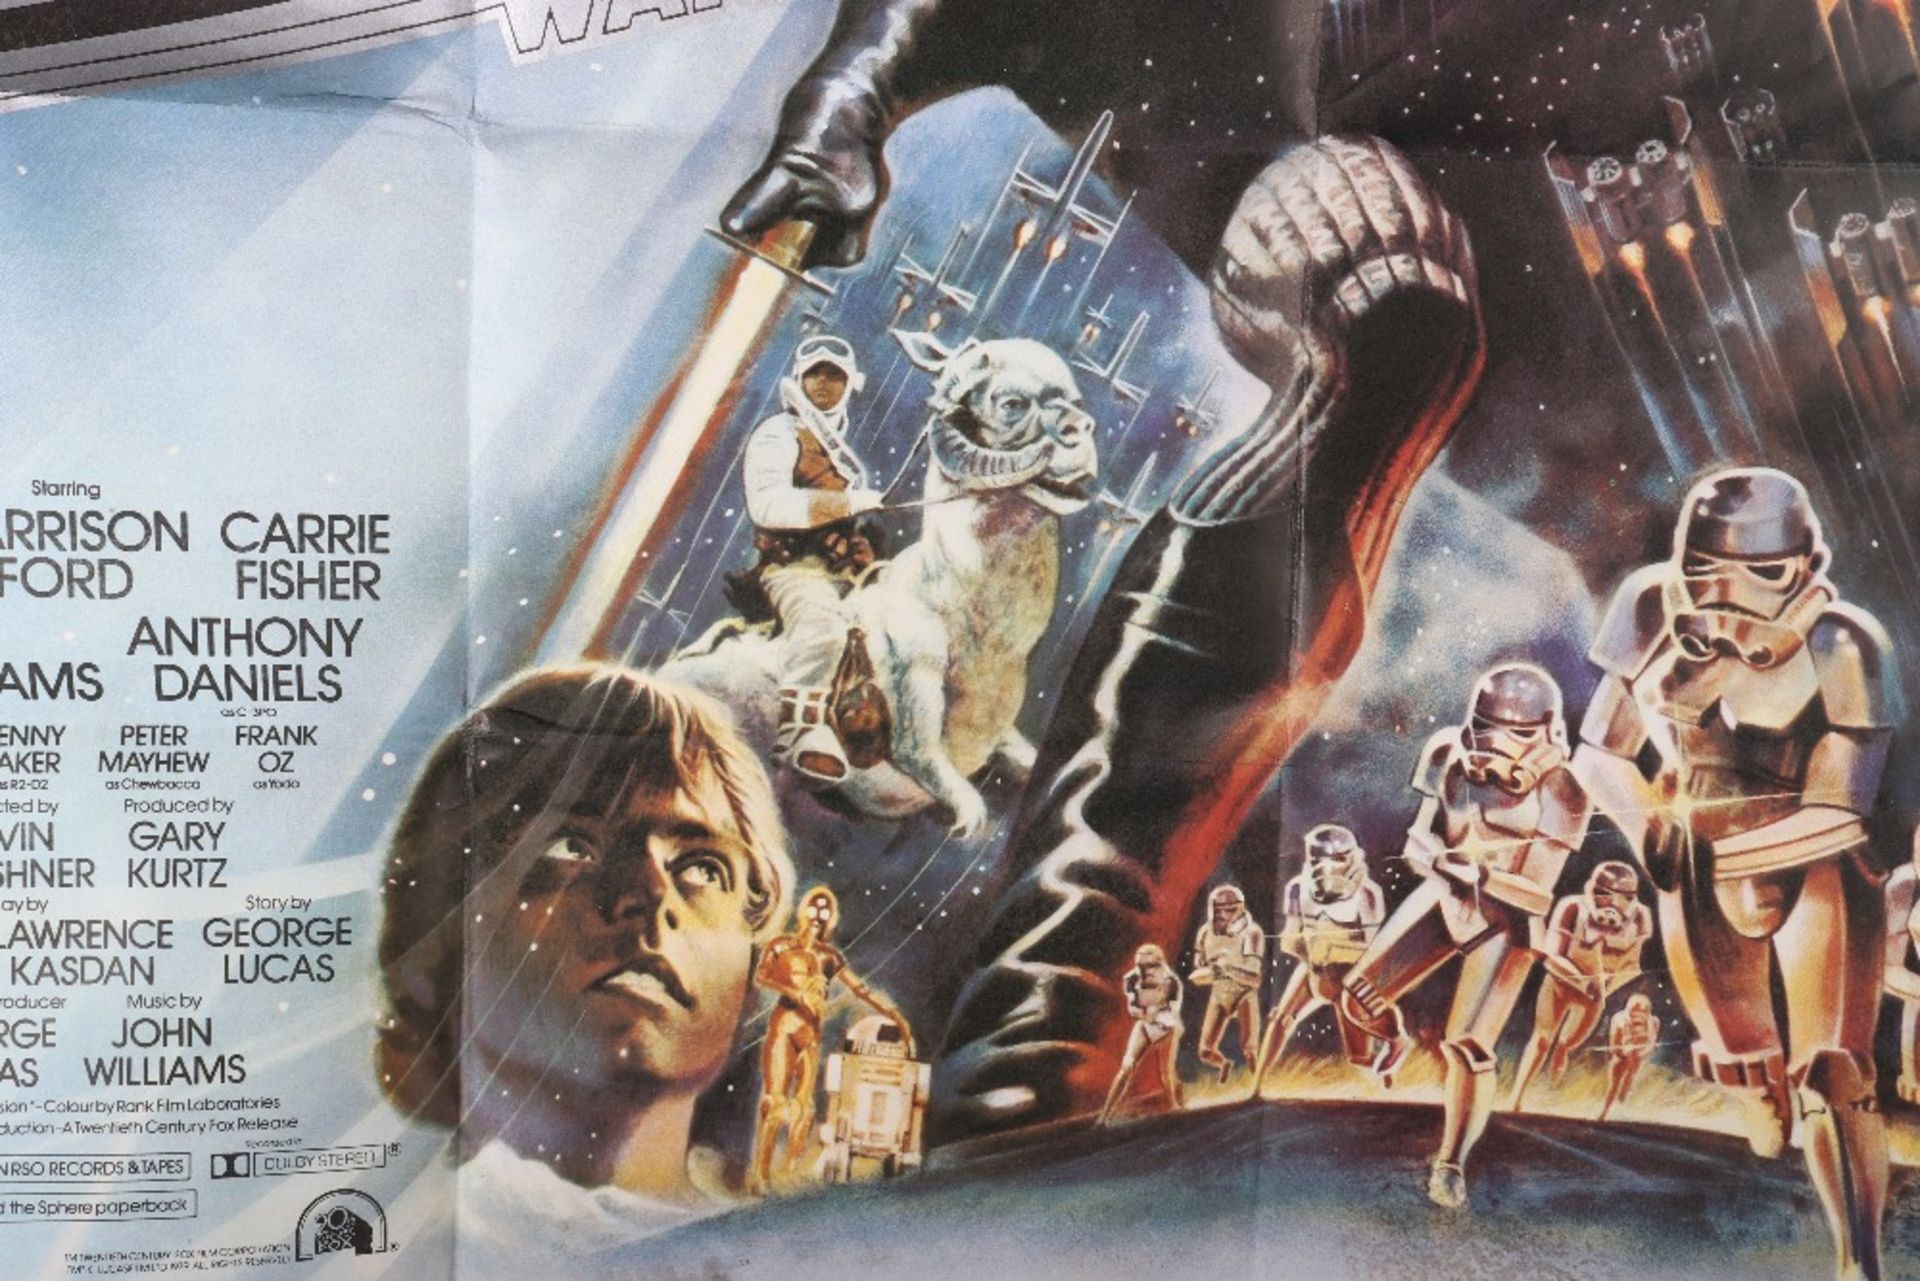 Star Wars The Empire Strikes Back 1980 UK Quad Original Film Poster - Image 8 of 8